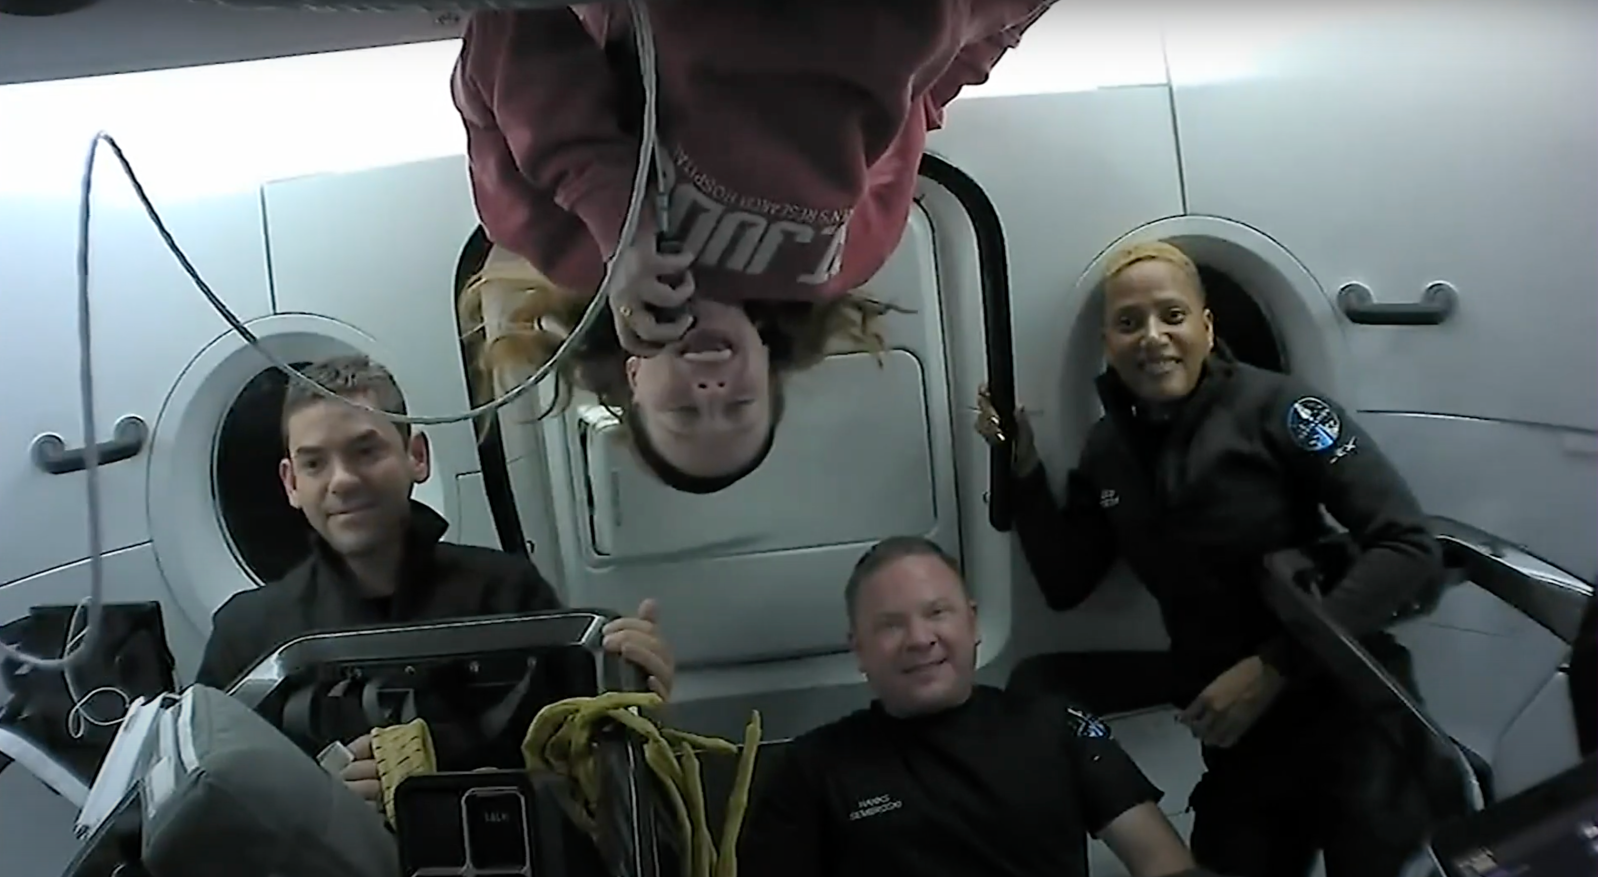 Inspiration4 Crew in orbit speaking with St. Jude patients.